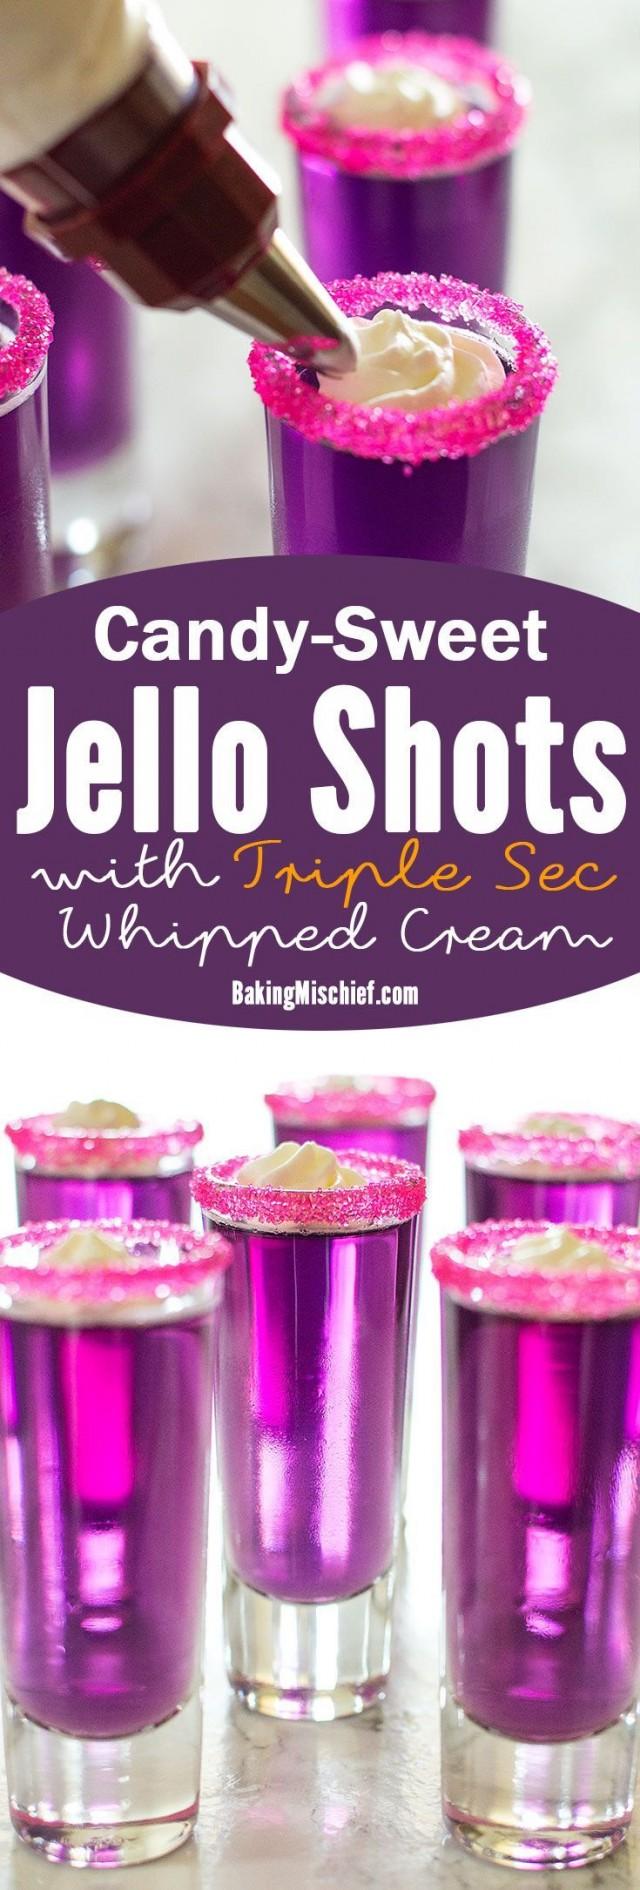 Candy-Sweet Jello Shots With Triple Sec Whipped Cream #2574190 - Weddbook